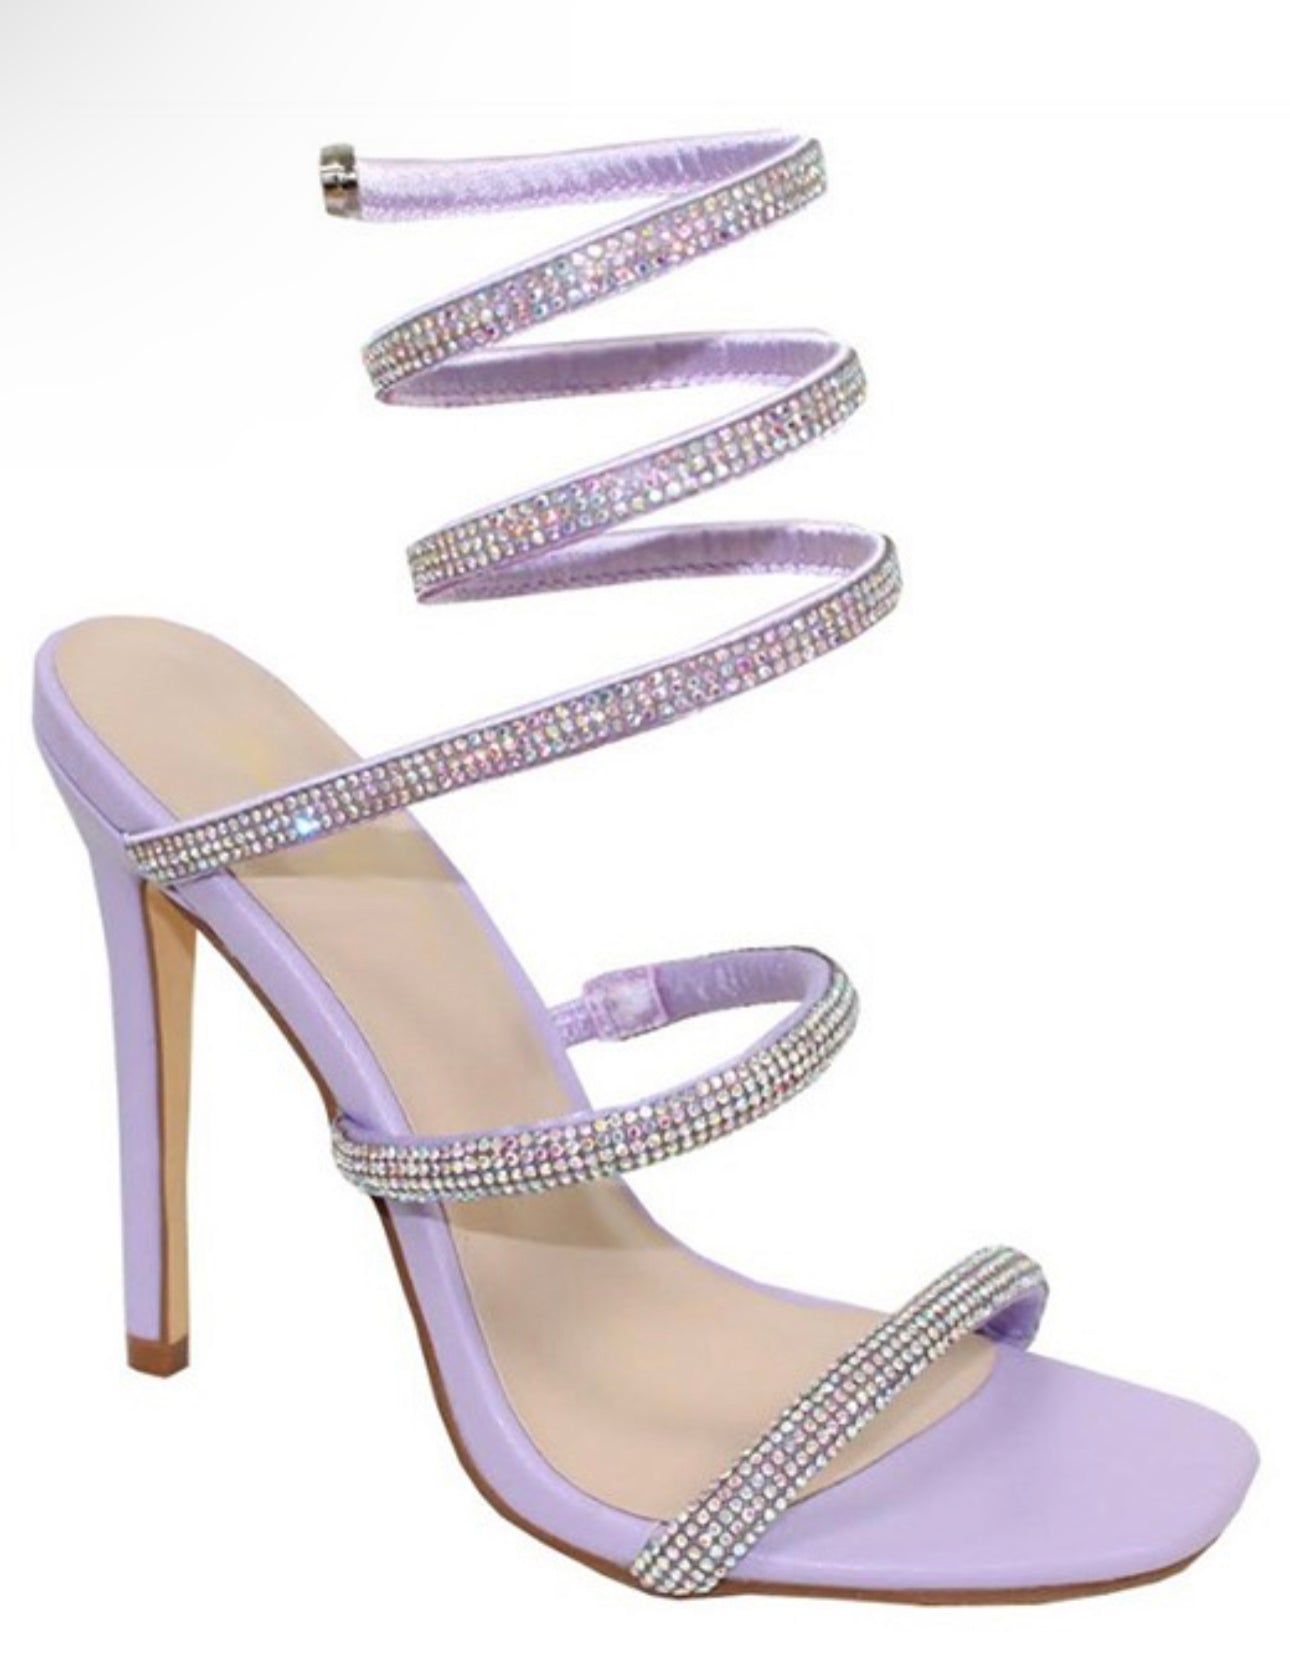 Model # 2318 Lavender Daisy Ultra Heels – Broke Bride Dresses